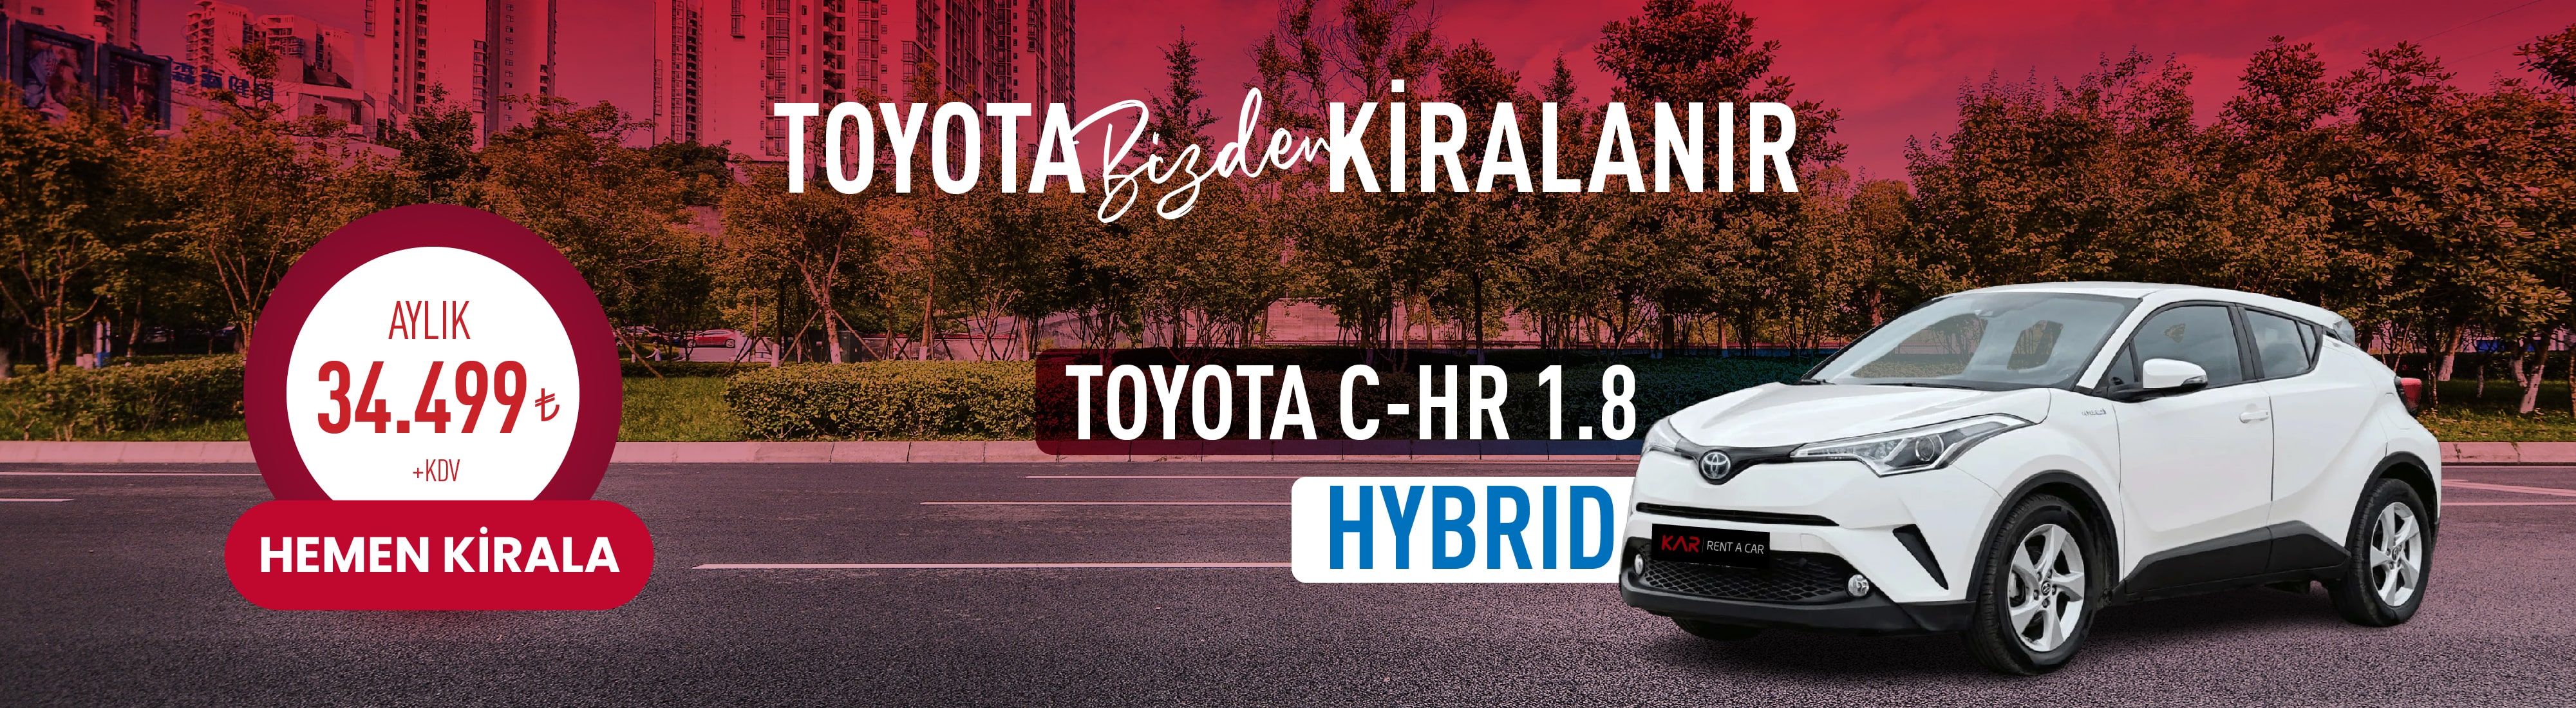 Toyota C-HR Kampanya